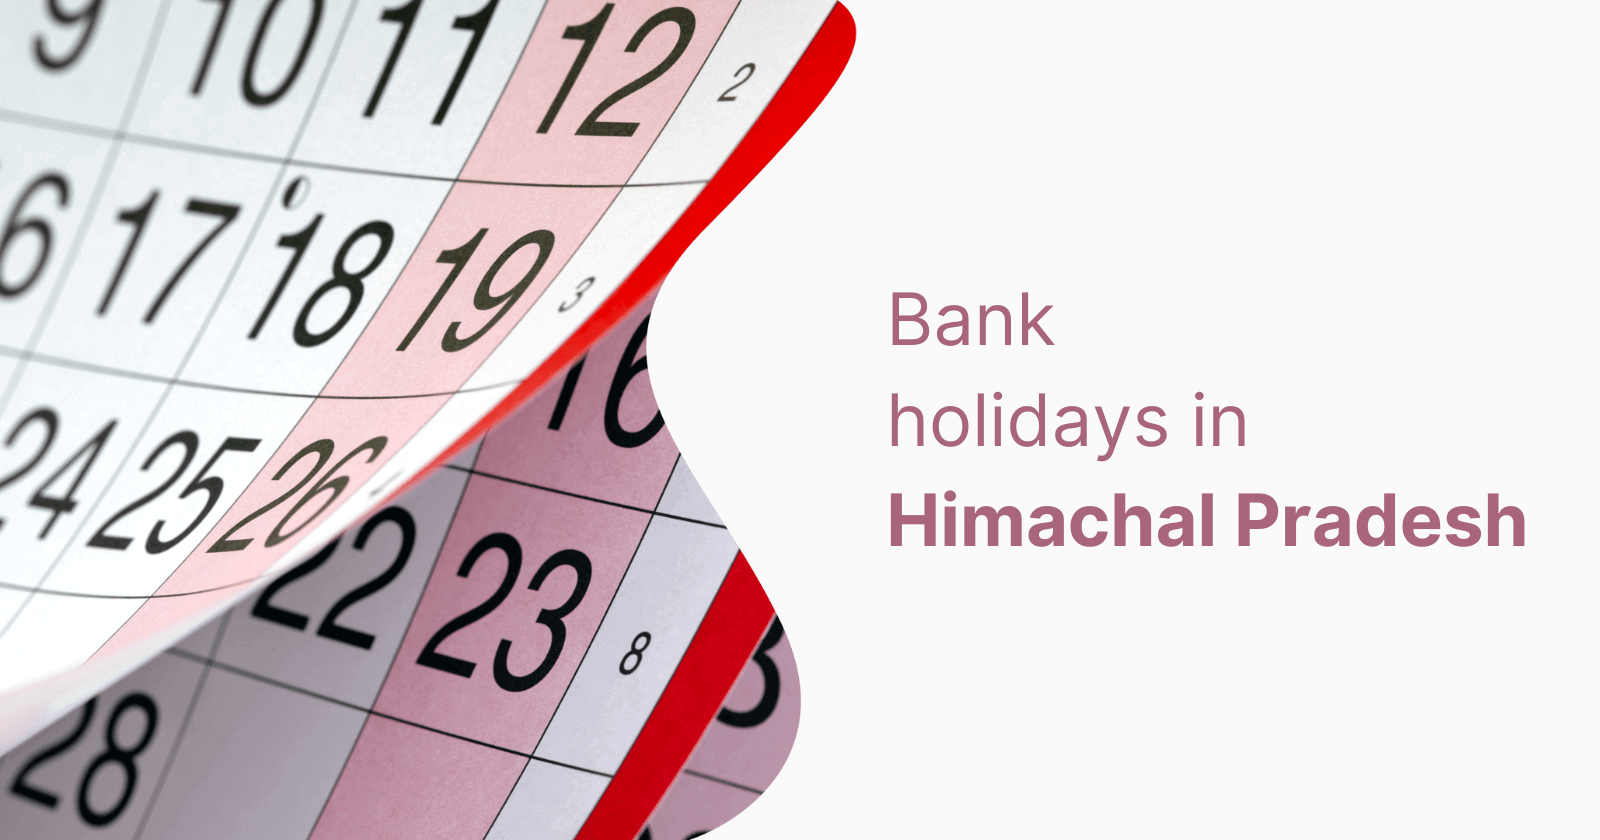 Himachal Pradesh Holidays: List of Bank Holidays in Himachal Pradesh in 2023
